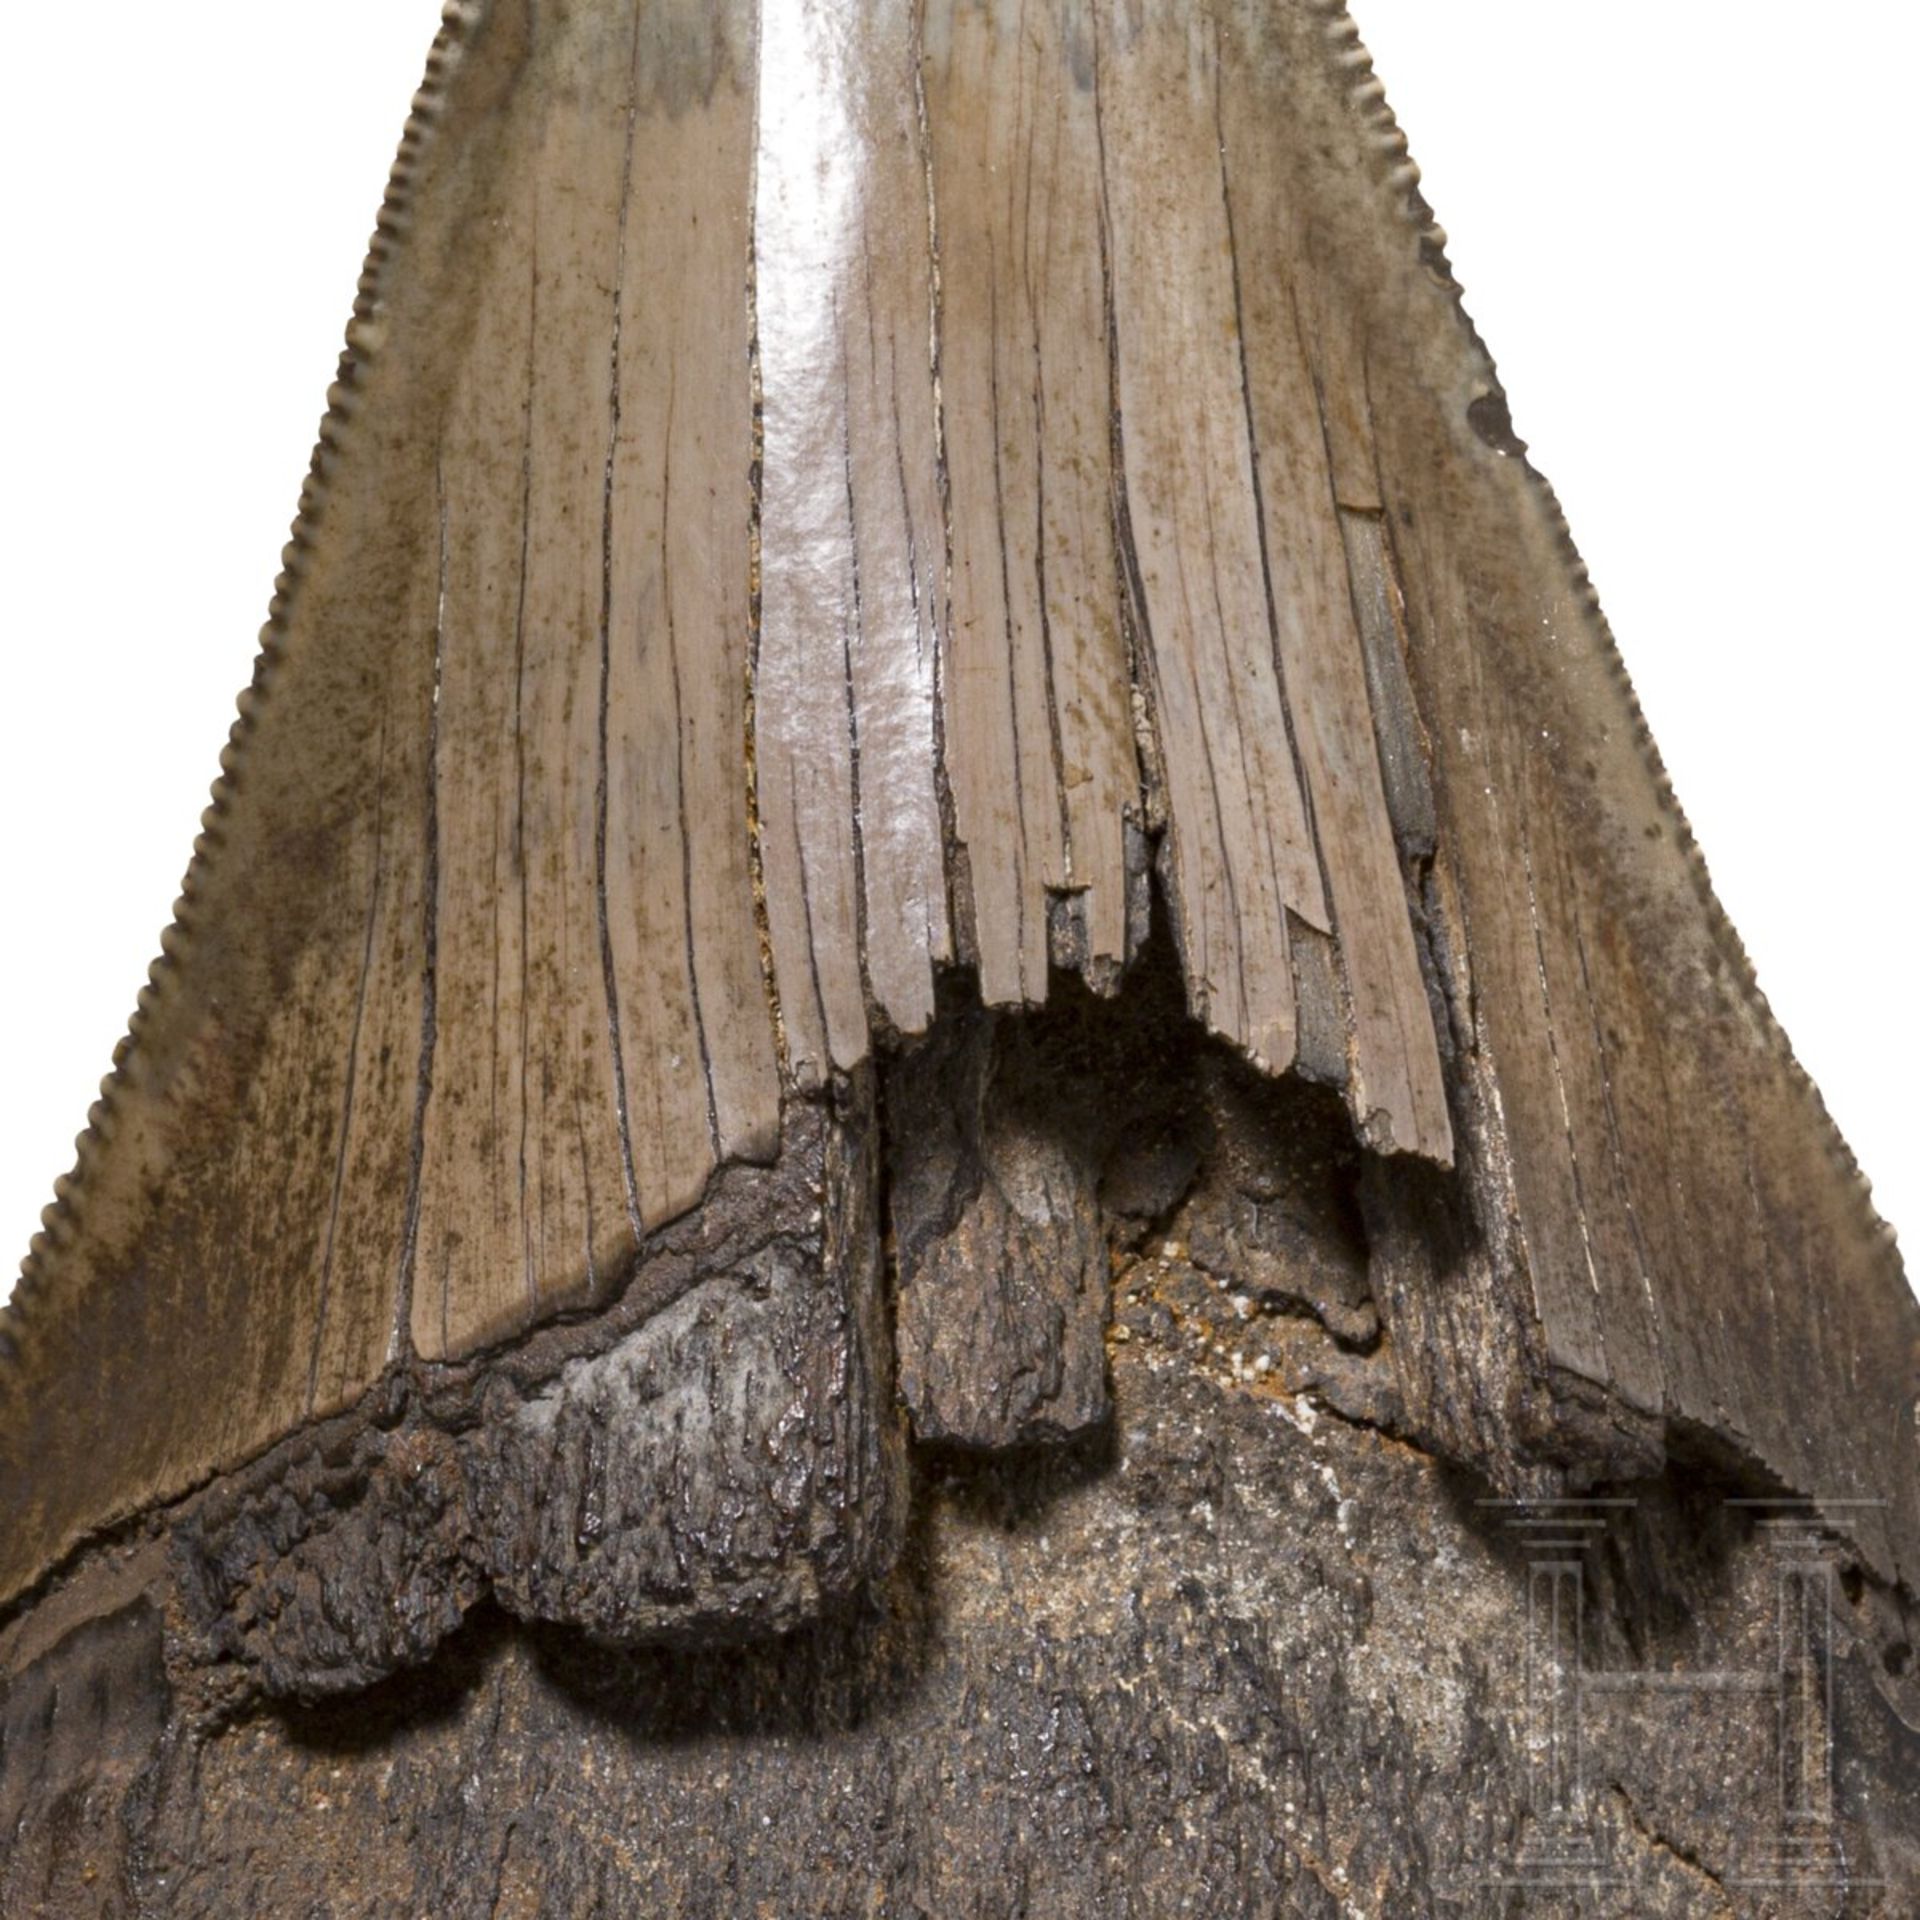 Fossiler Zahn eines otodus megalodon, frühes Miozän - spätes Pliozän - Image 3 of 3